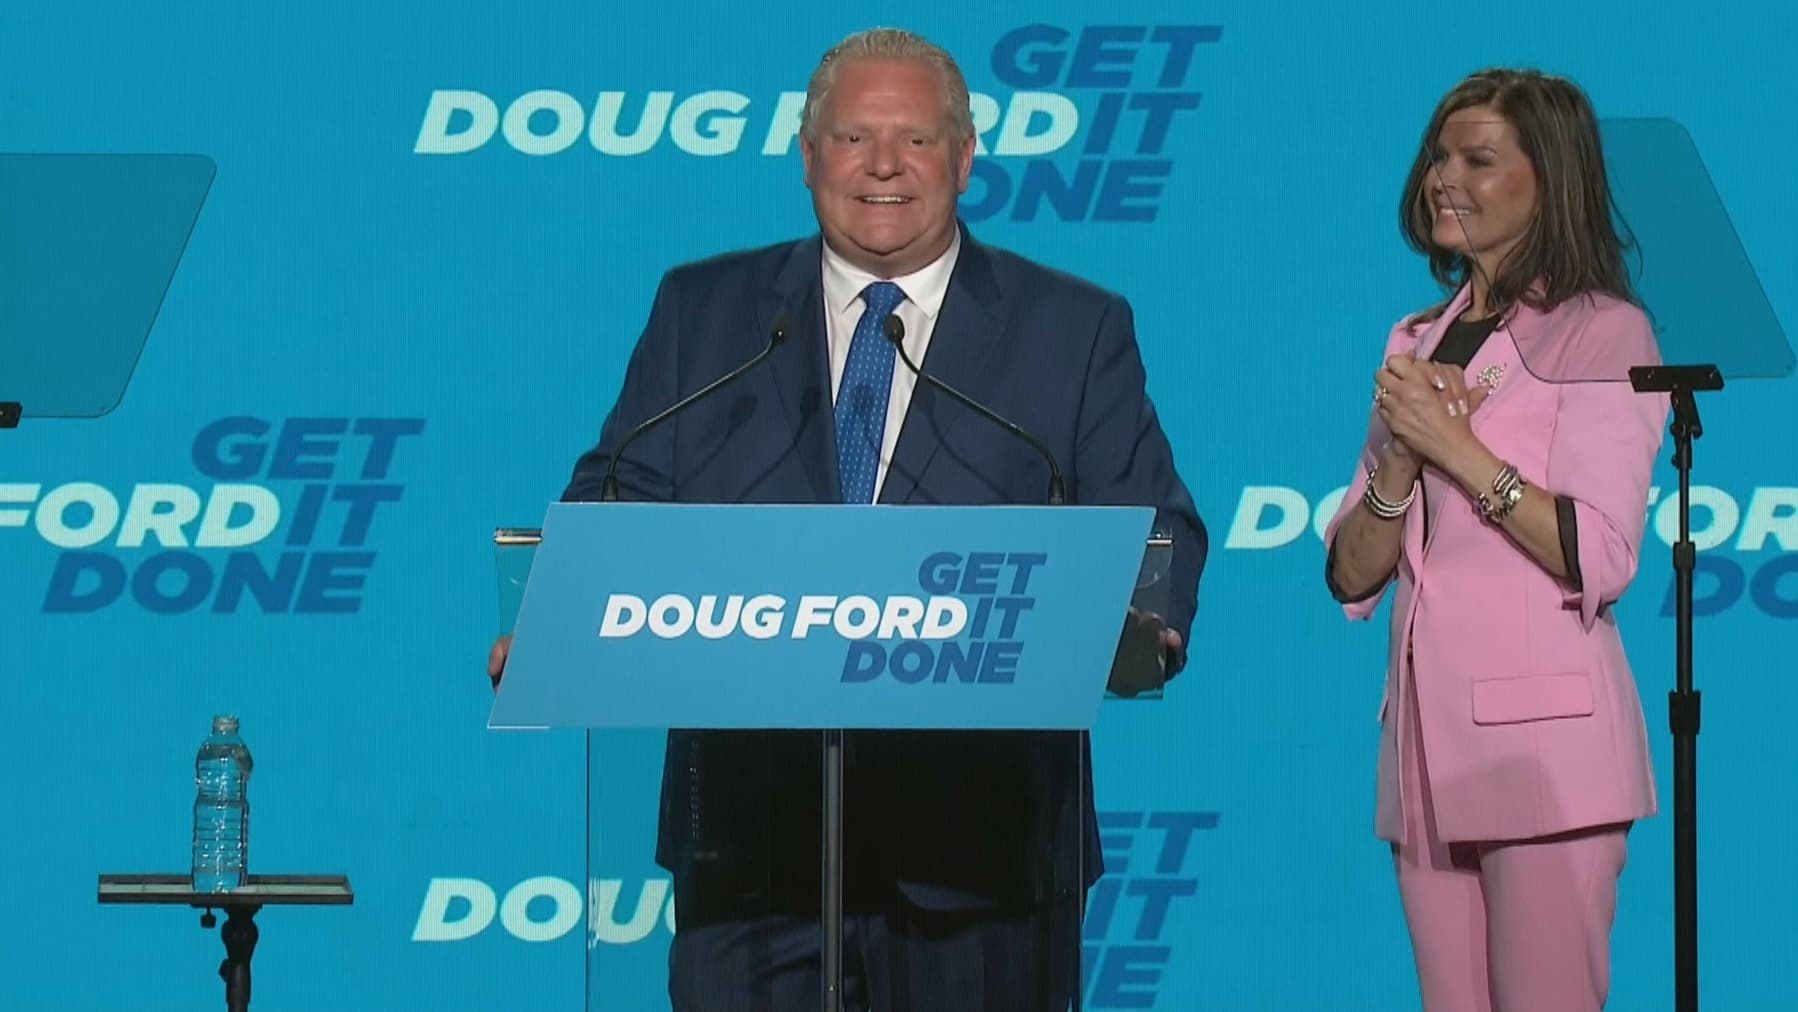 How Doug Ford won an even bigger majority